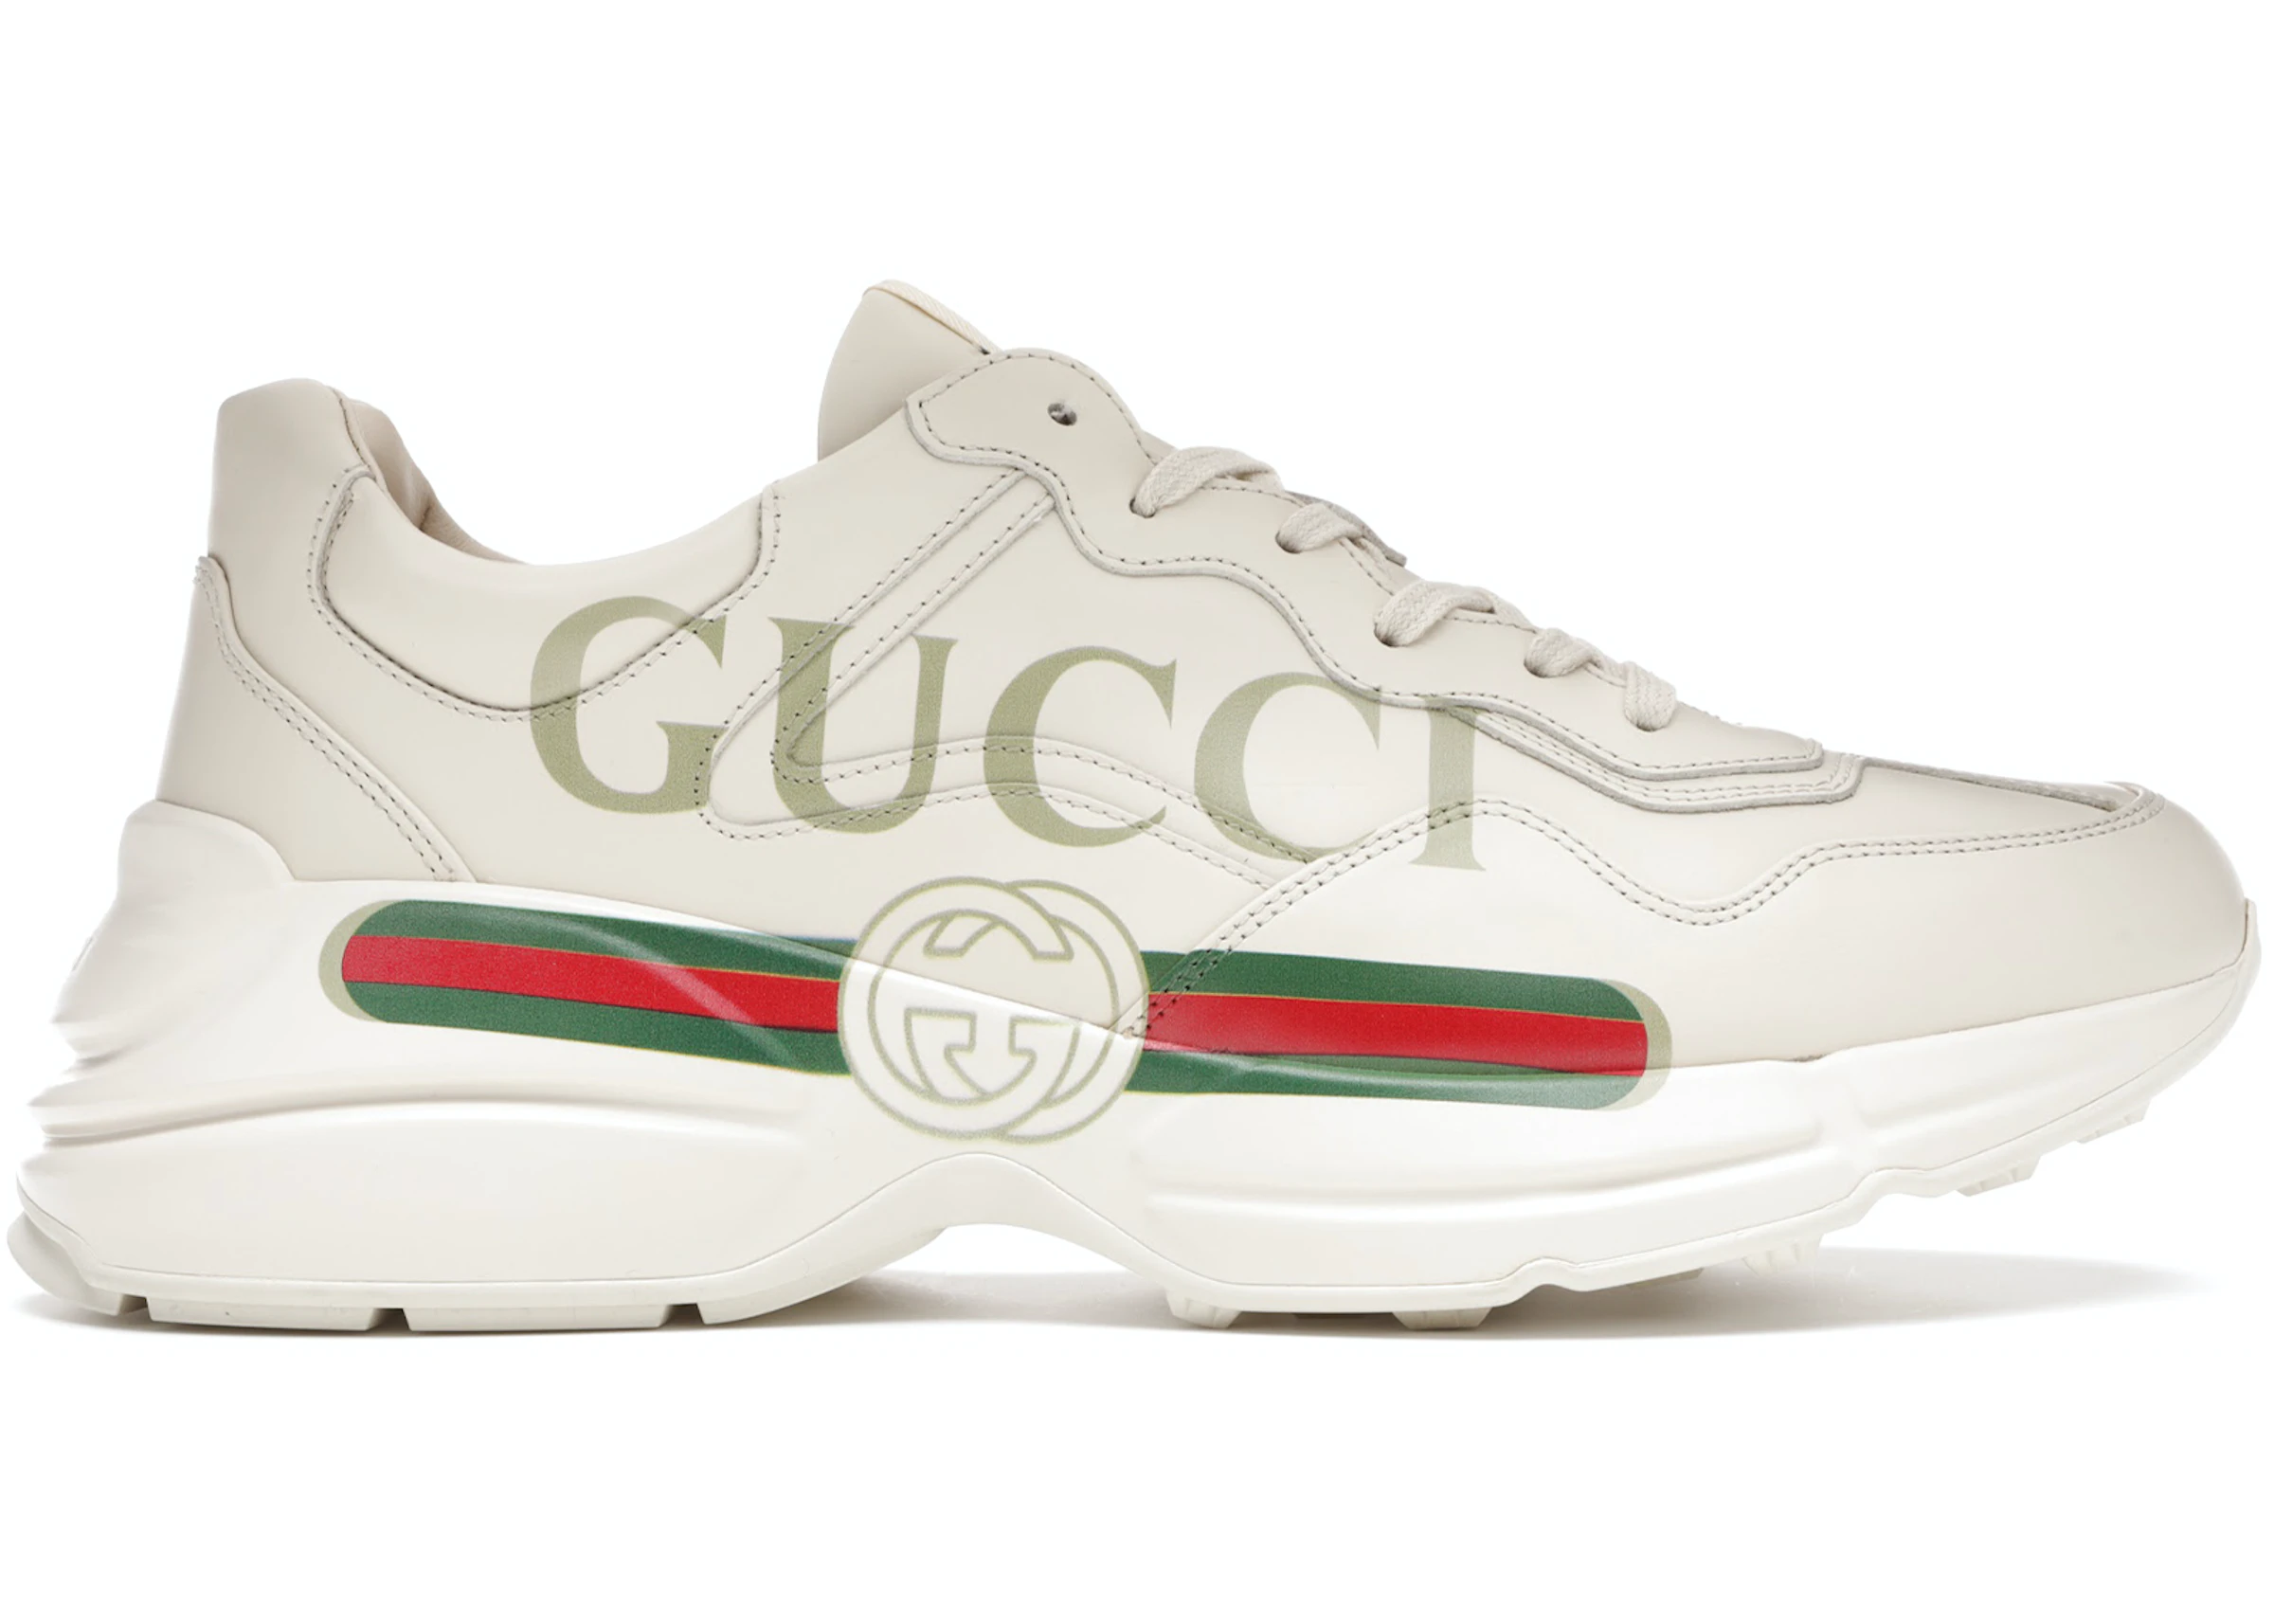 Zeug mengen Post impressionisme Buy Gucci Shoes, Slides, Sneakers and Sandals